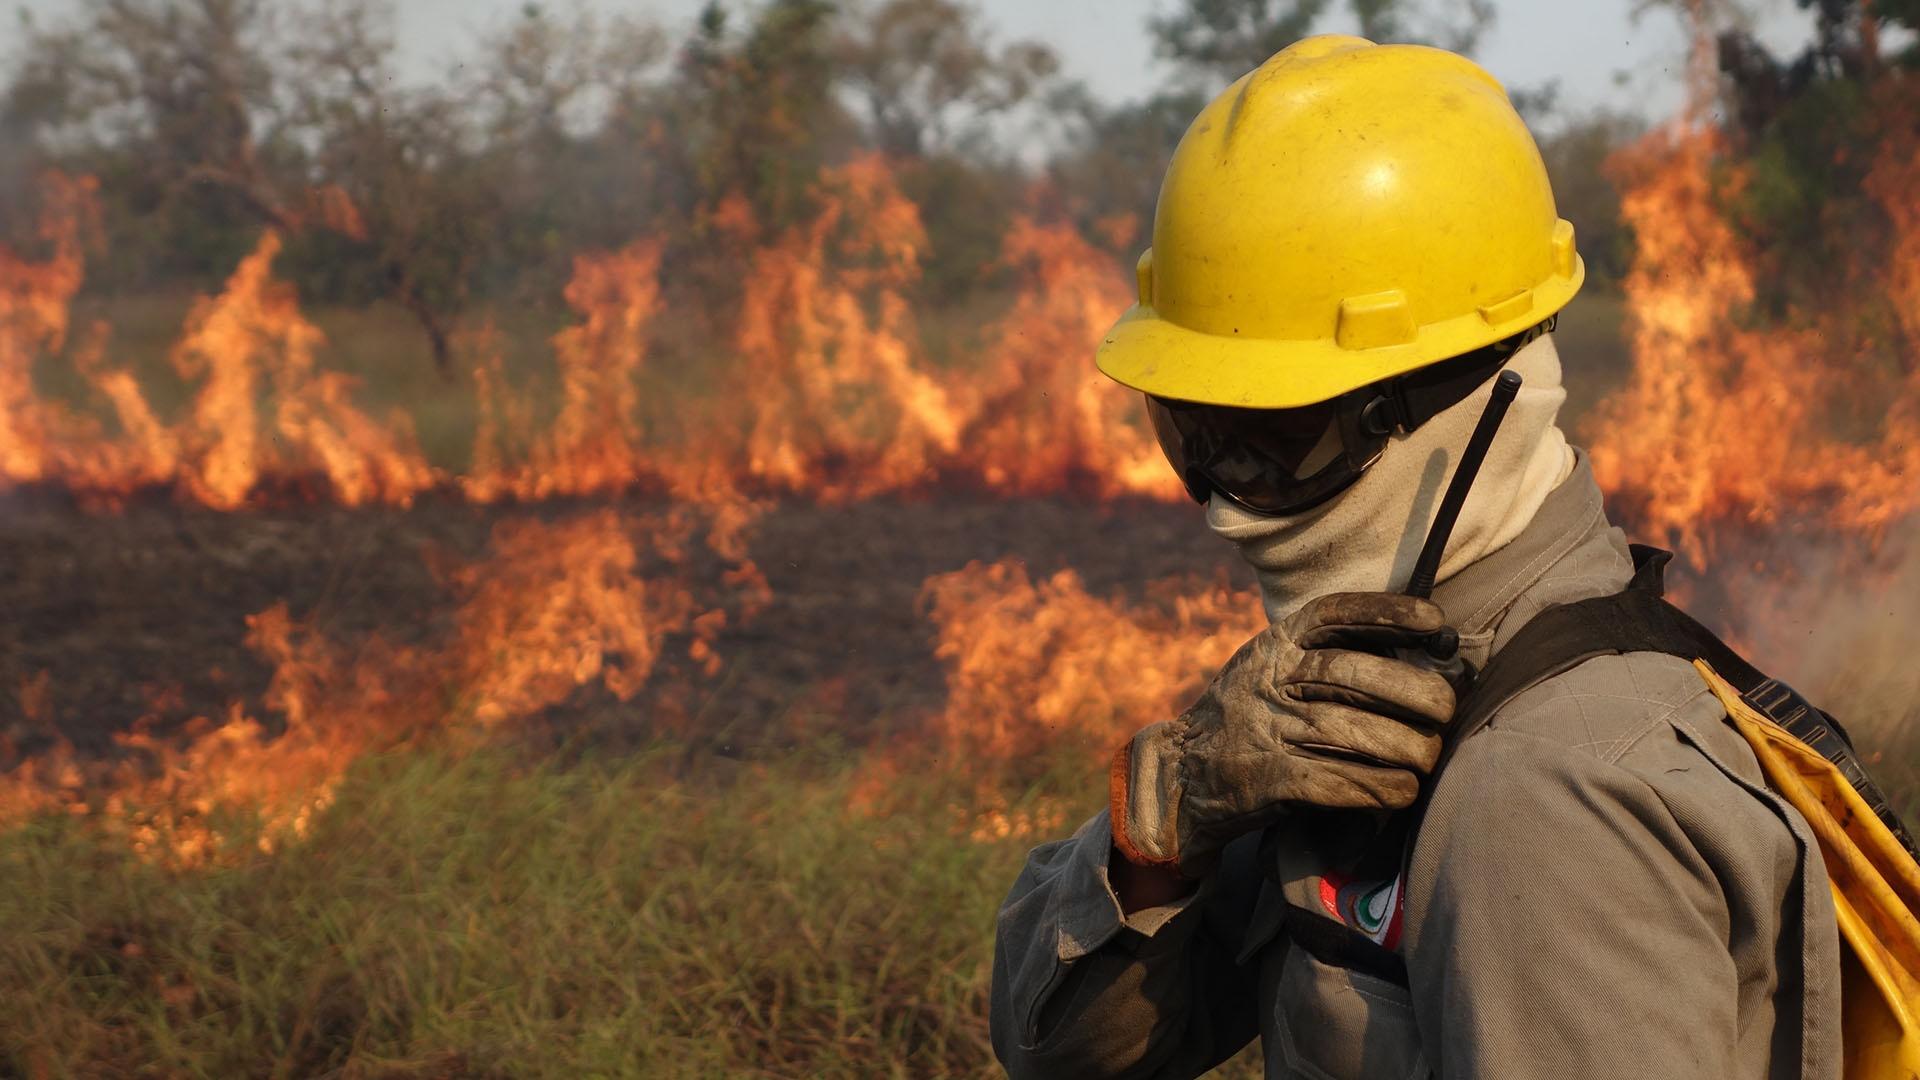 Firefighters tackle blaze in Amazon rainforest.